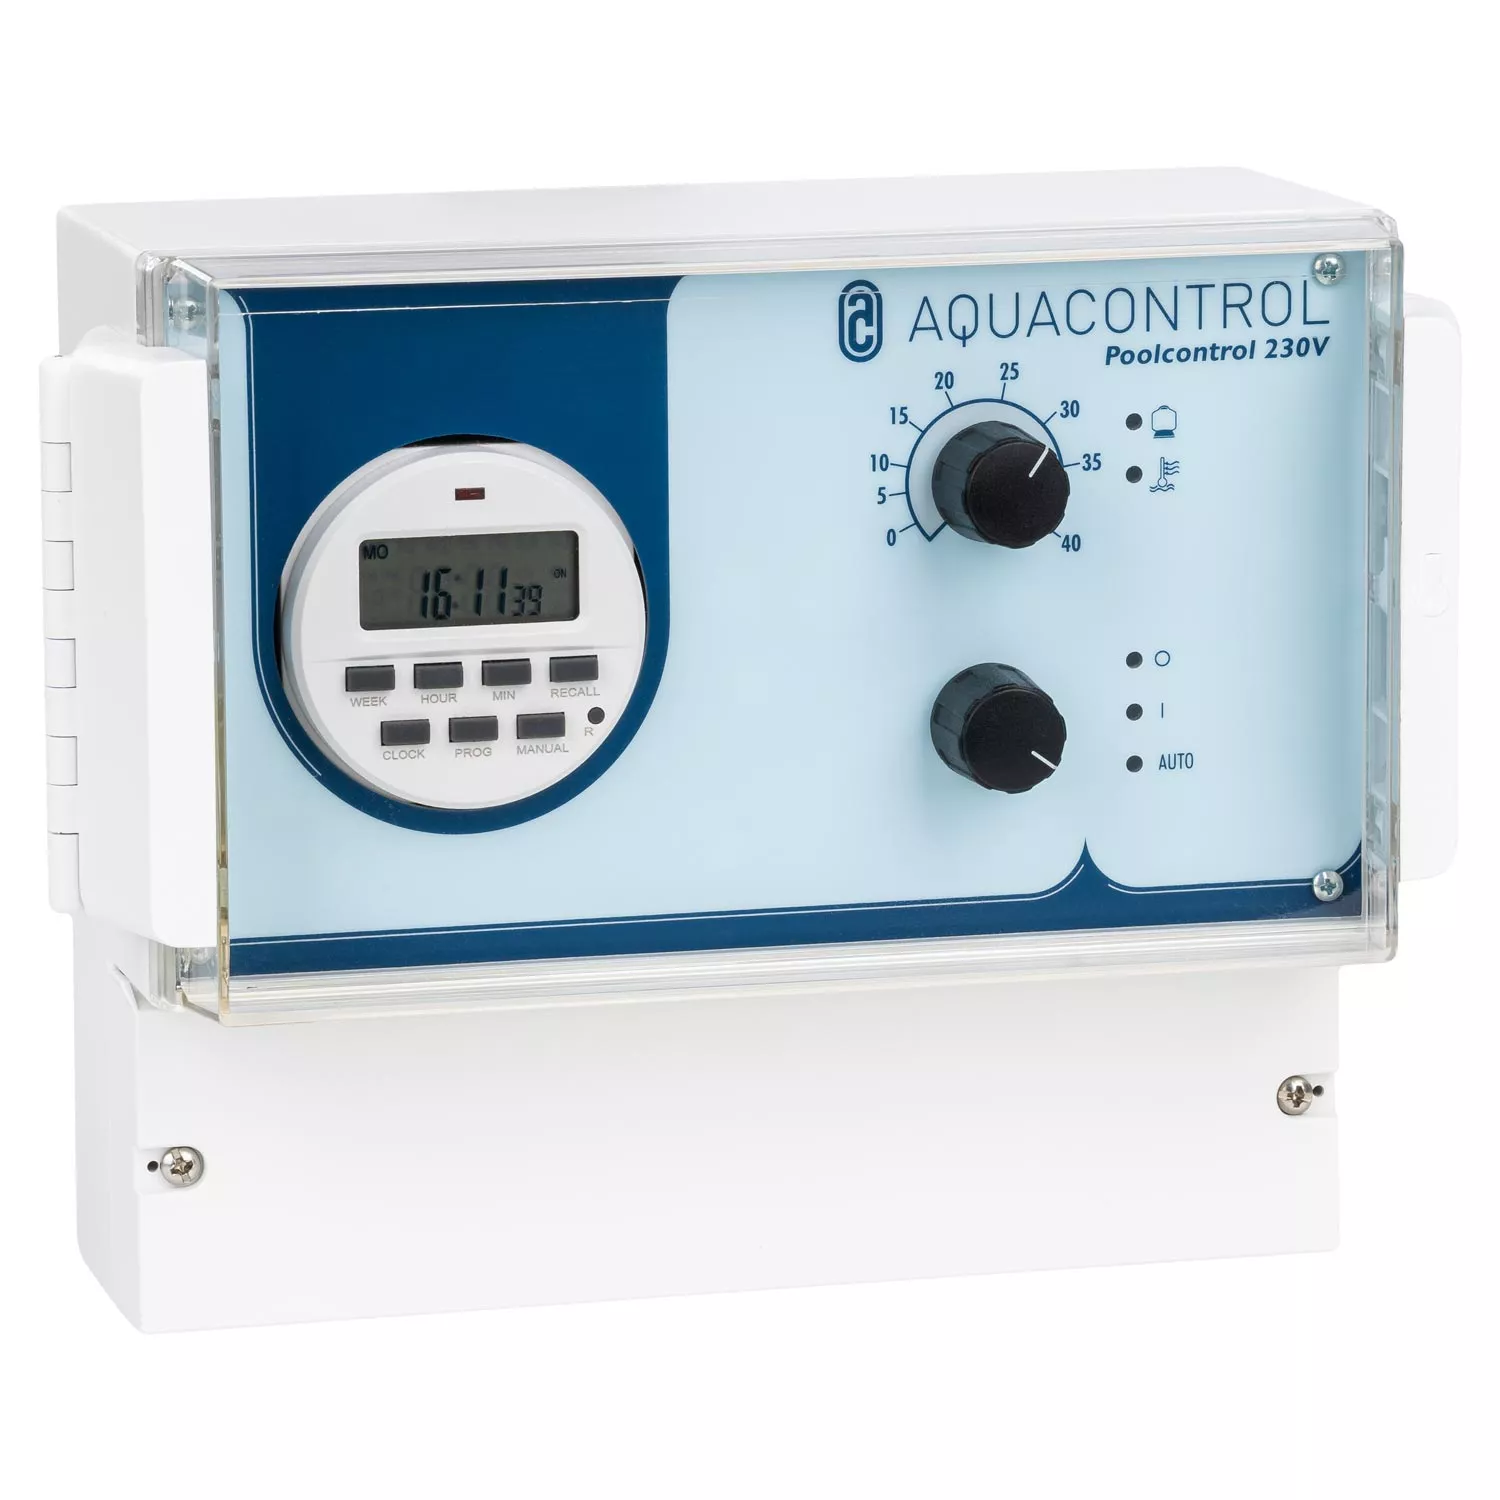 Aquacontrol Poolcontrol 230V